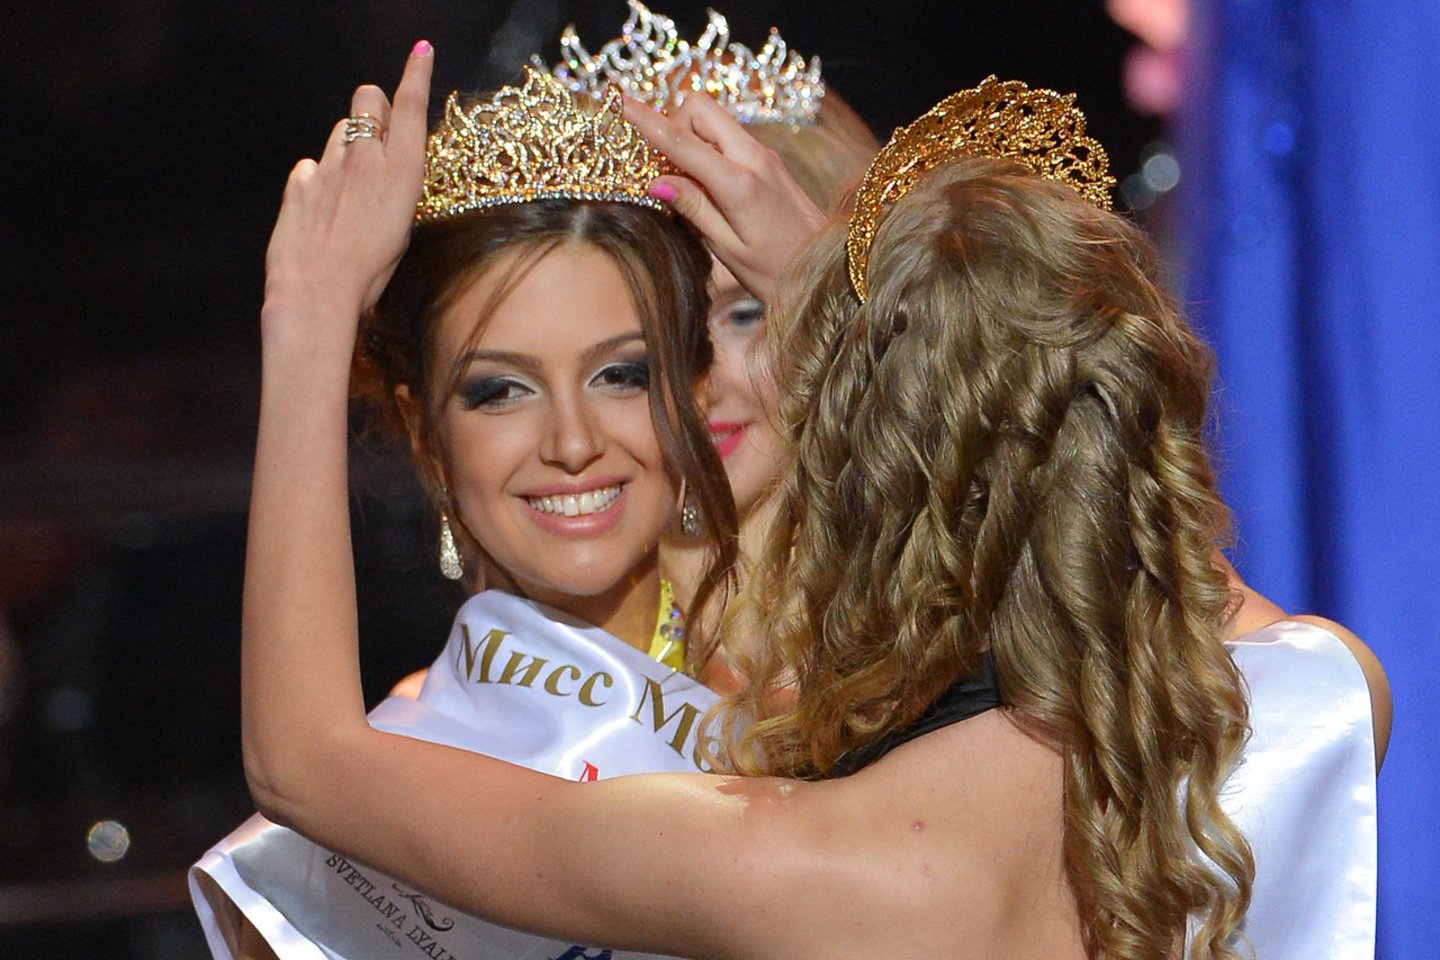  Oksana Vojevodina 2015 metais laimėjo konkursą „Mis Maskva“.<br> Sputnik/Scanpix nuotr. 